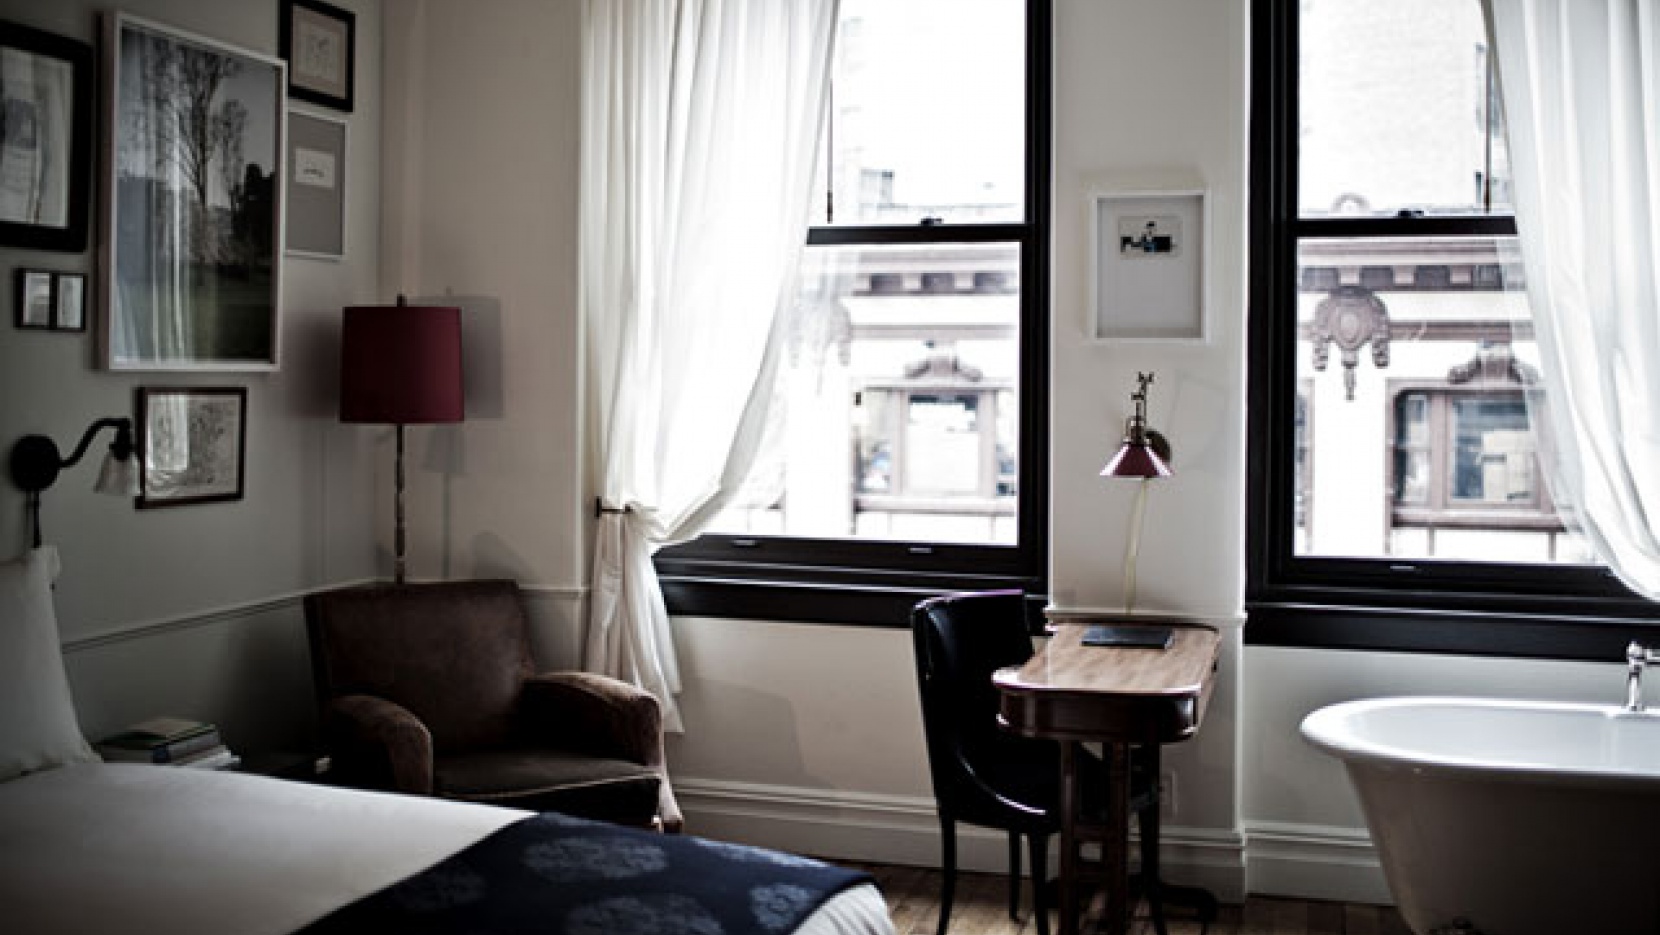 Craftsmanship and One-Bedroom Hotels with Fashion Designer